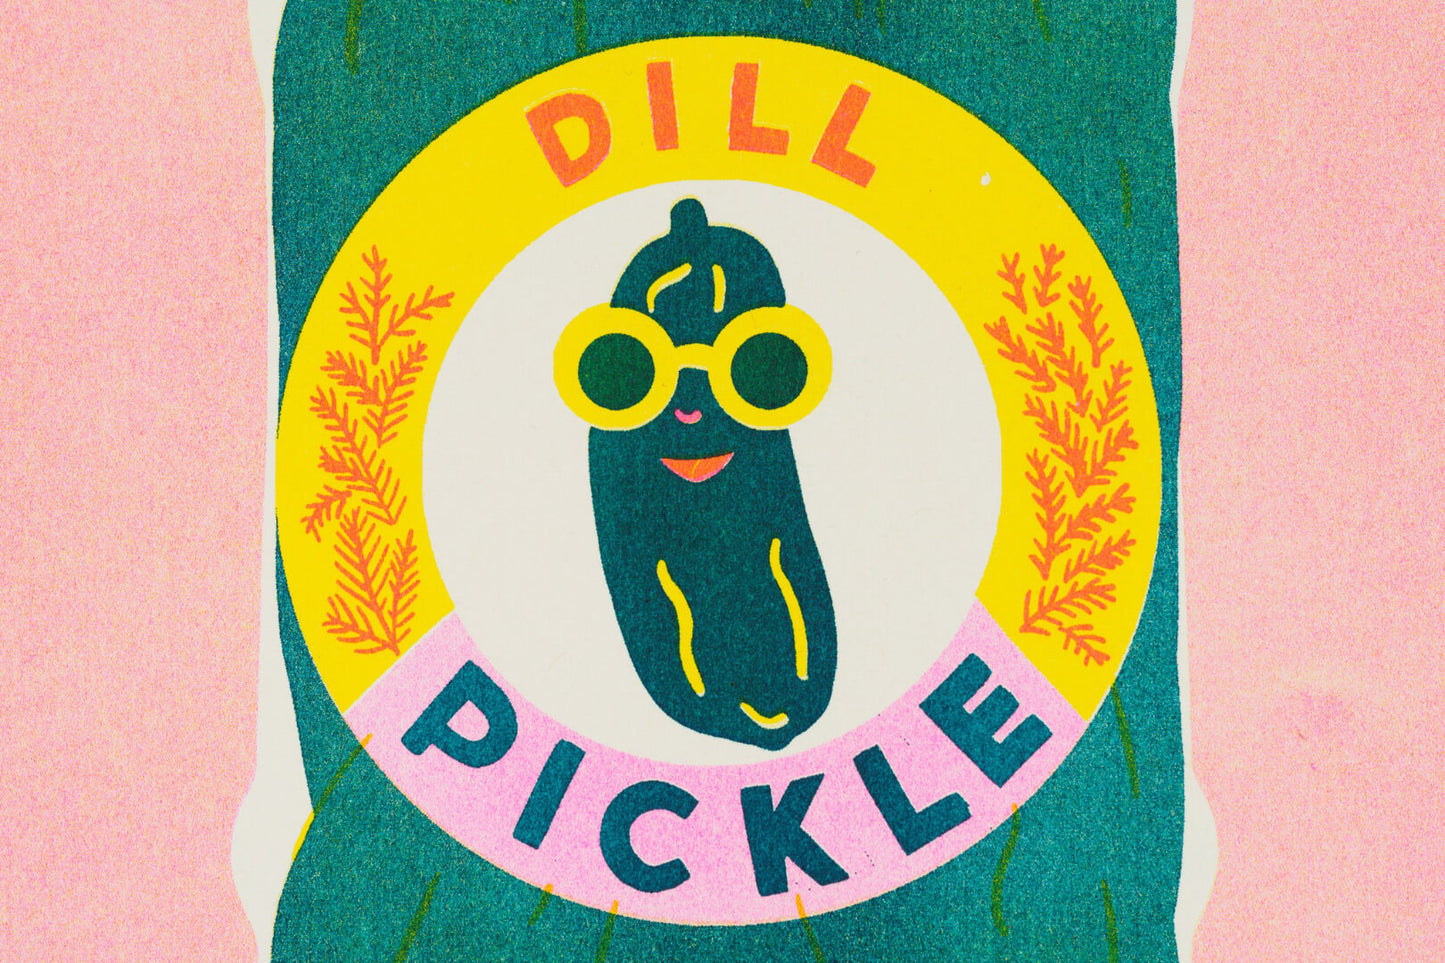 Pickle A4 Riso Print